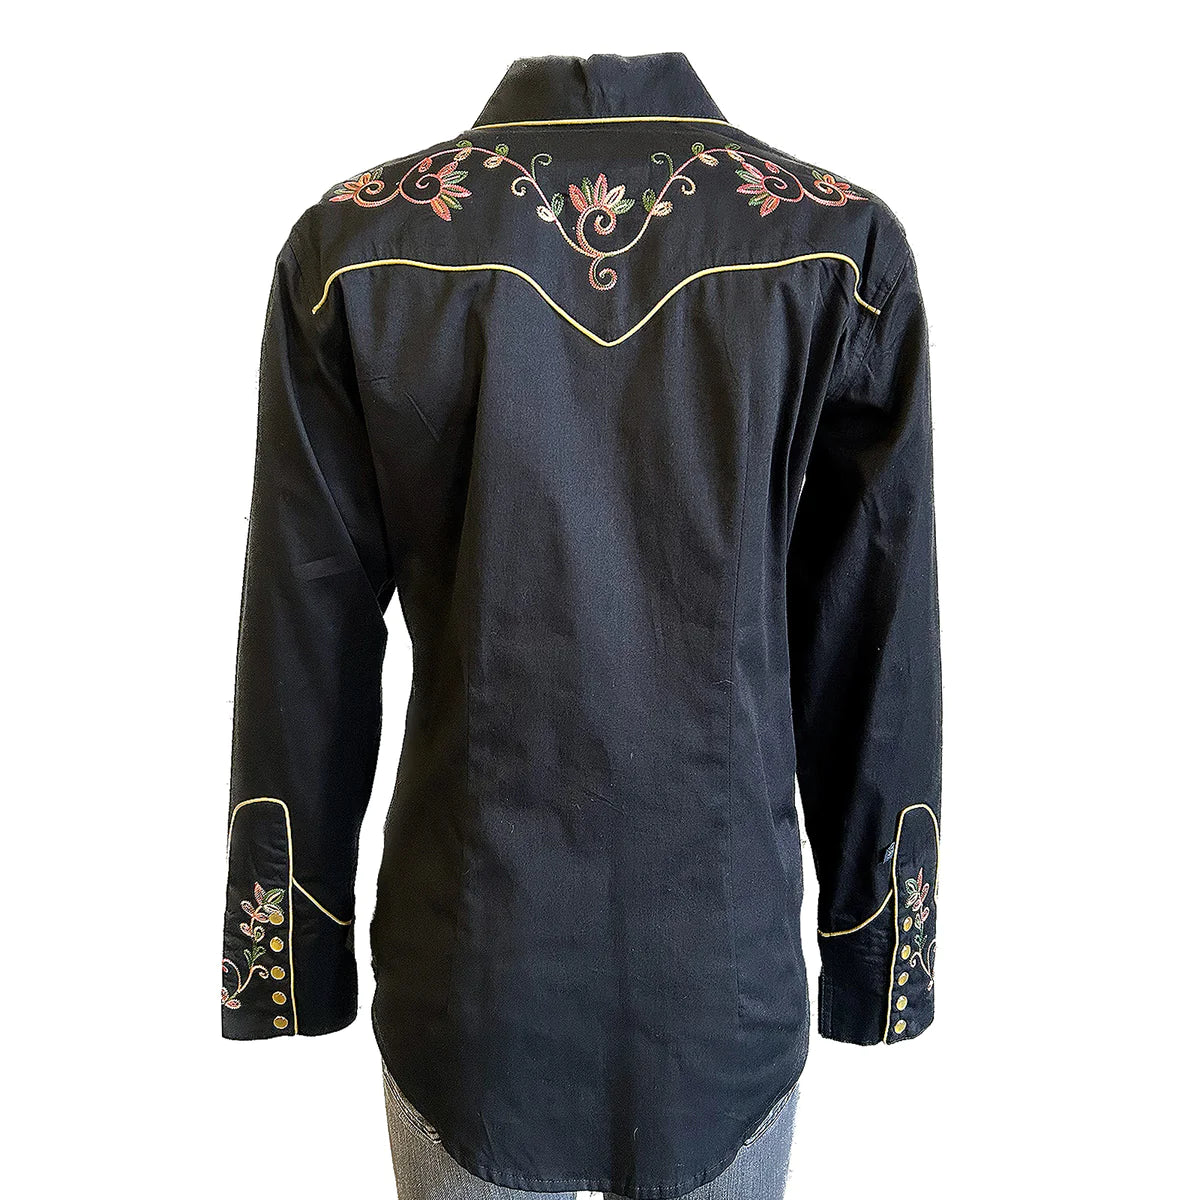 Rockmount Ranch Wear Women's Shirt Variegated Floral on Black Back